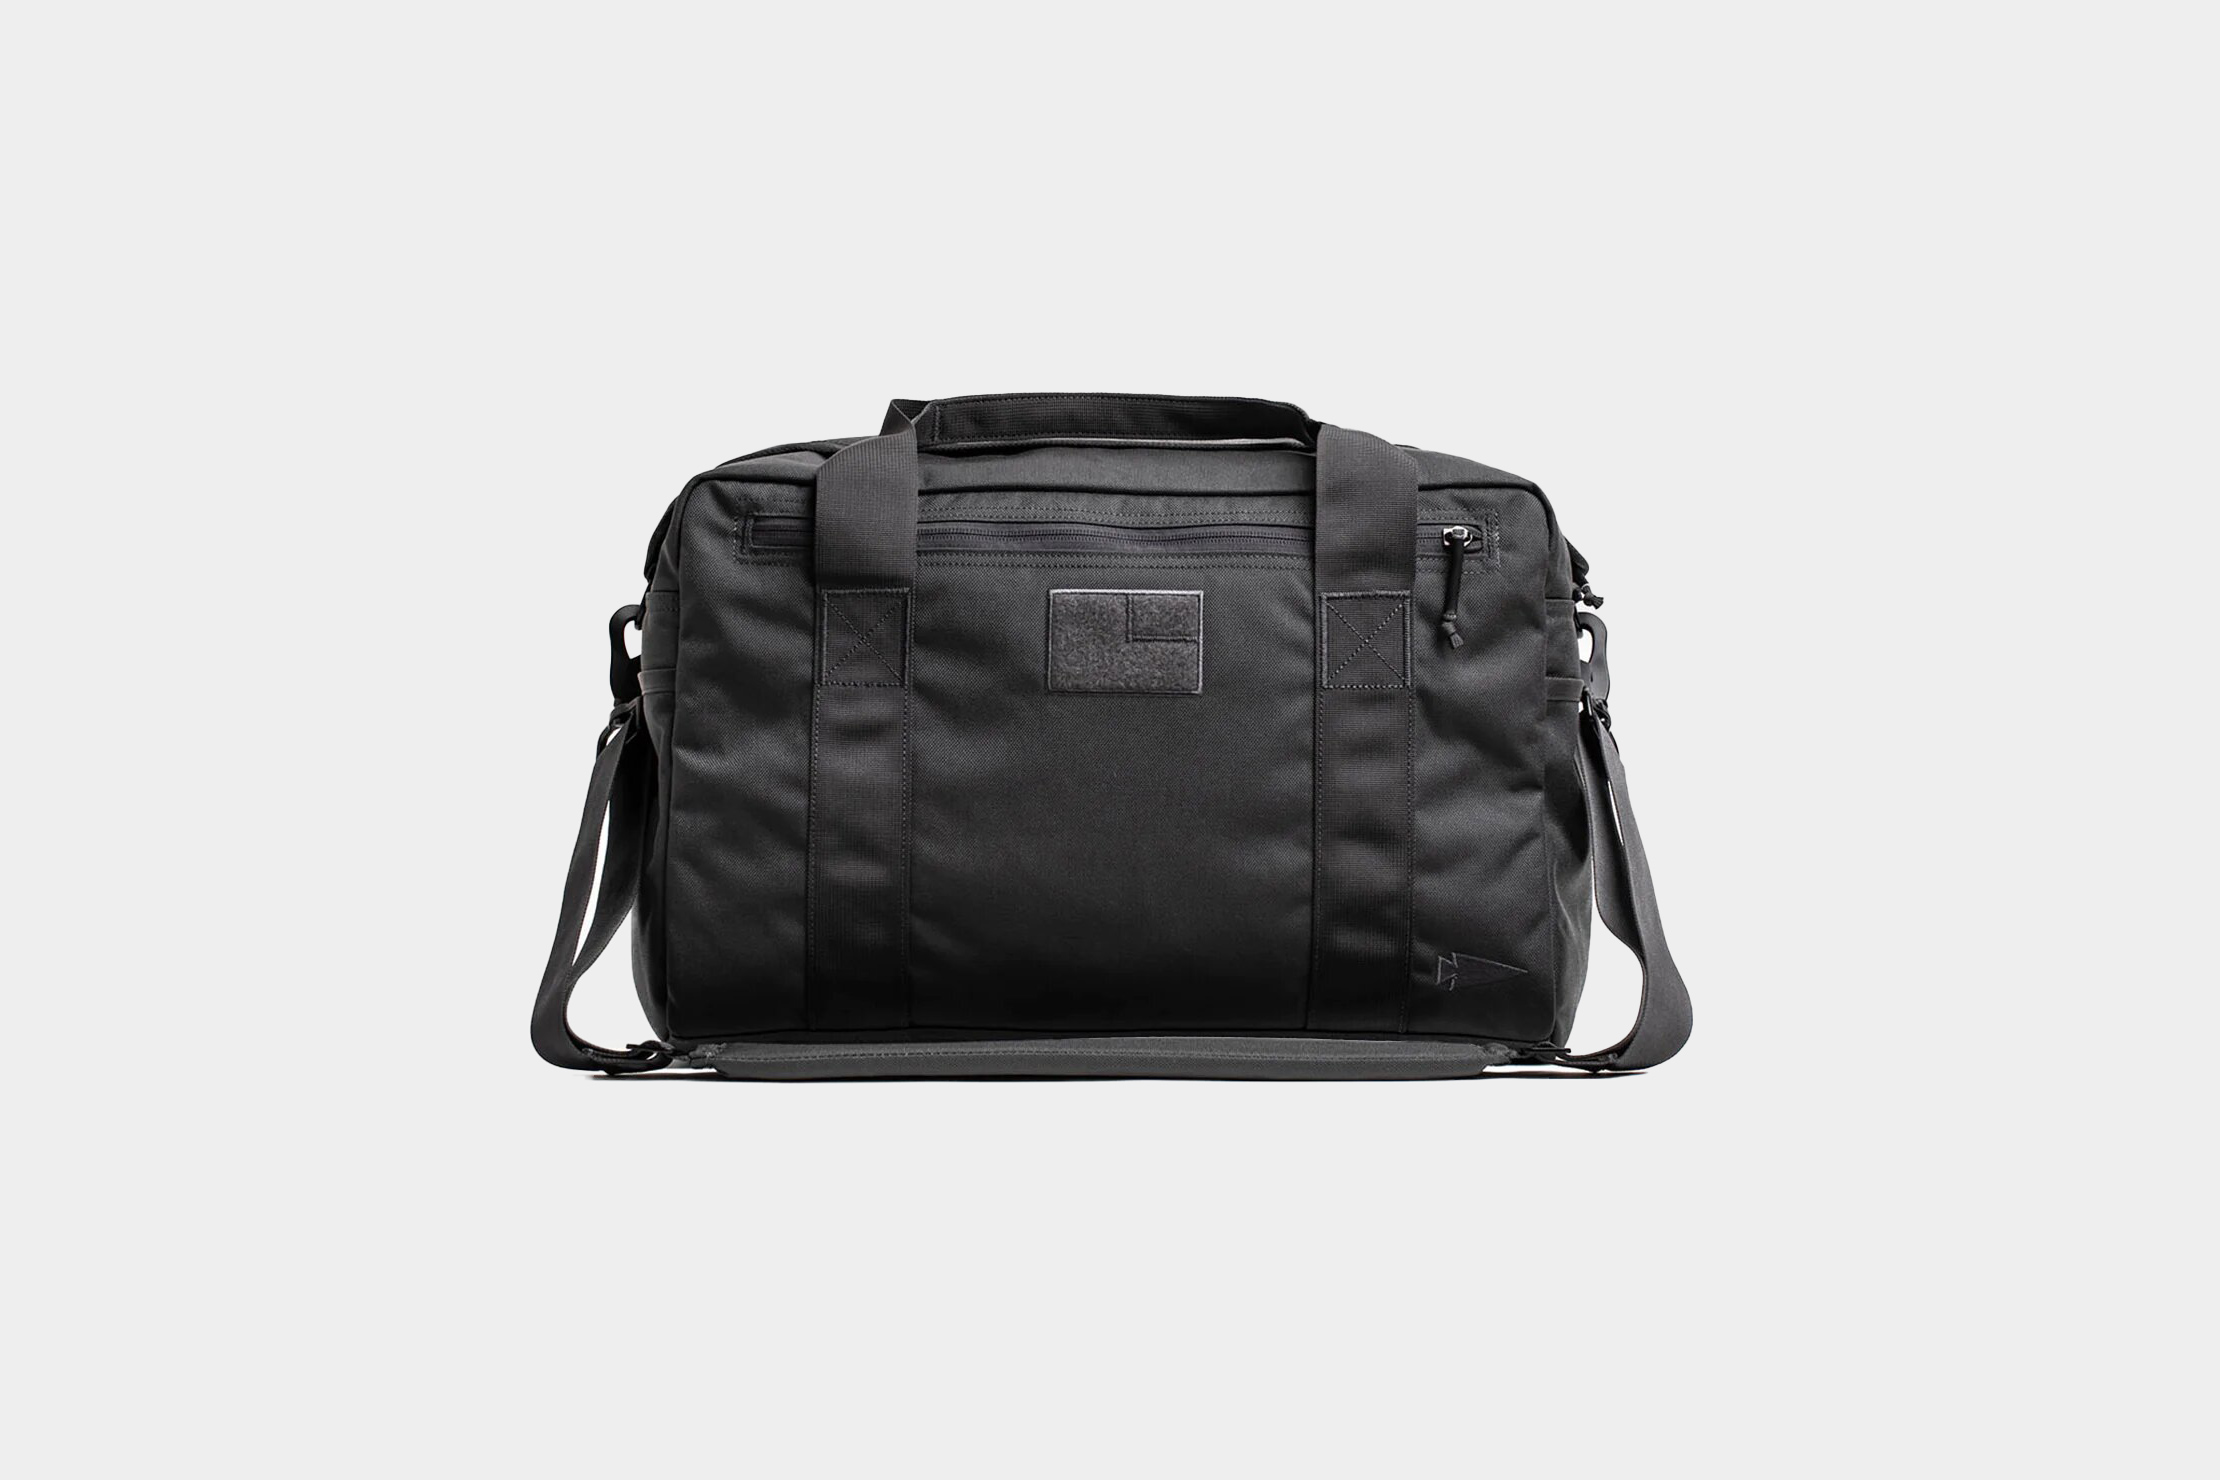 GORUCK Kit Bag 2.0 Review